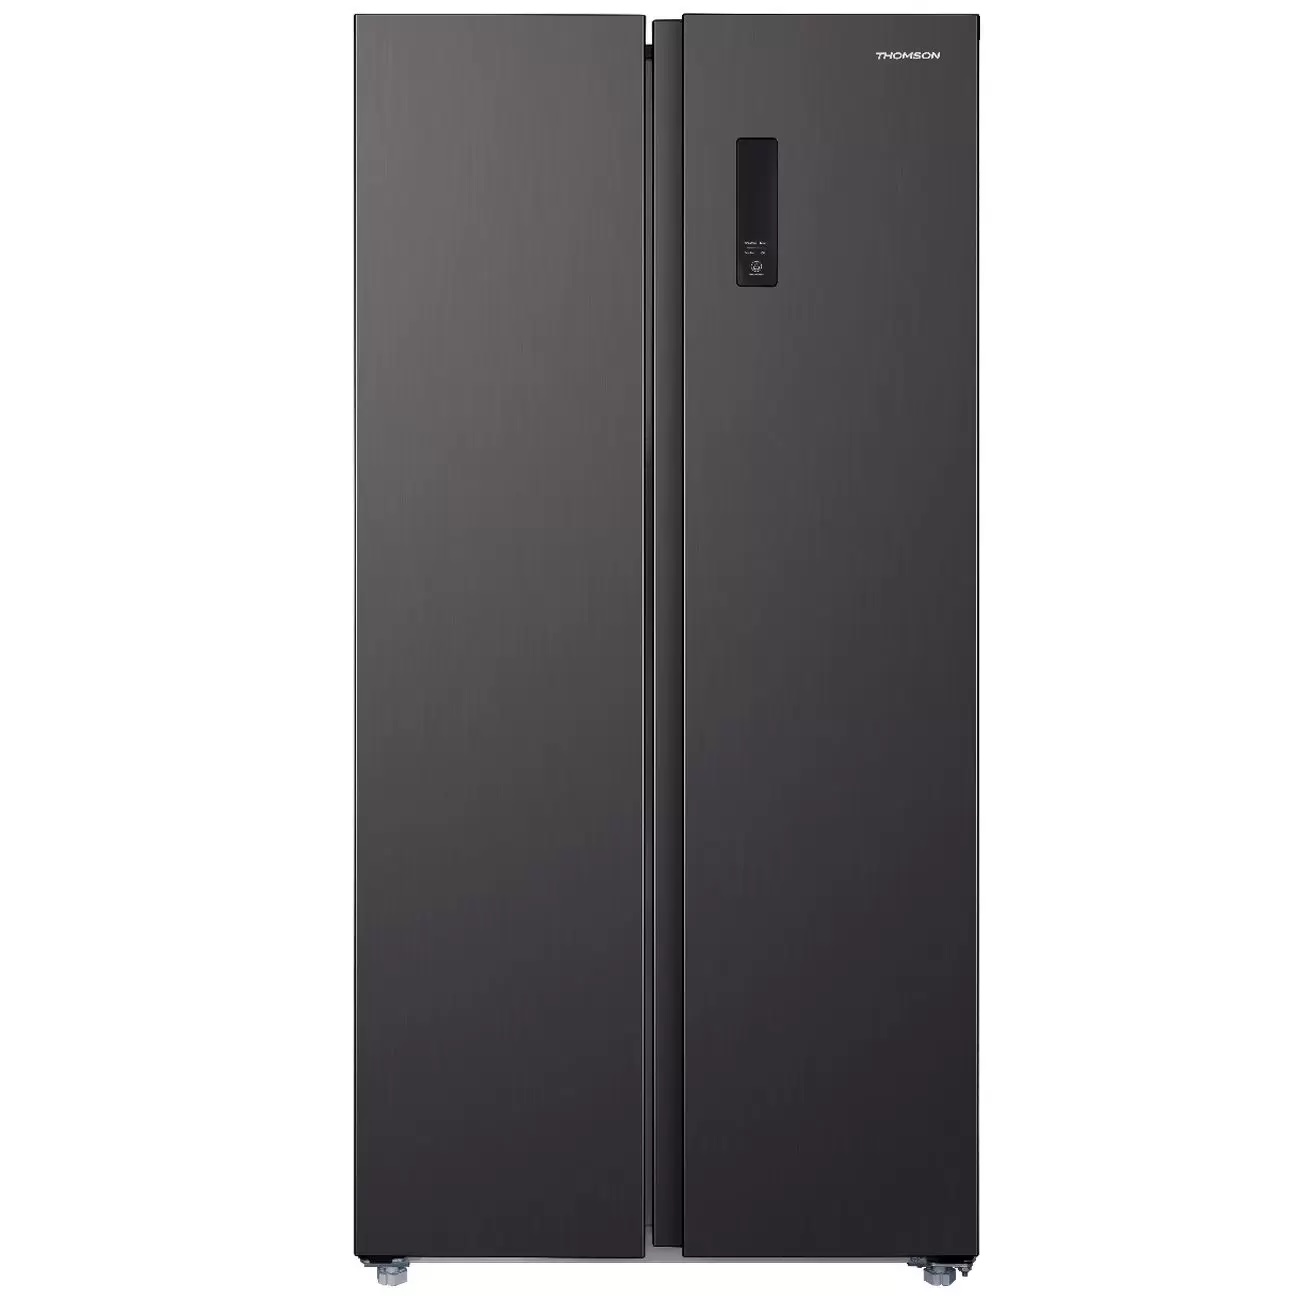 Холодильник Thomson SSC30EI32 серый воздухоувлажнитель thomson ph10m02 серый